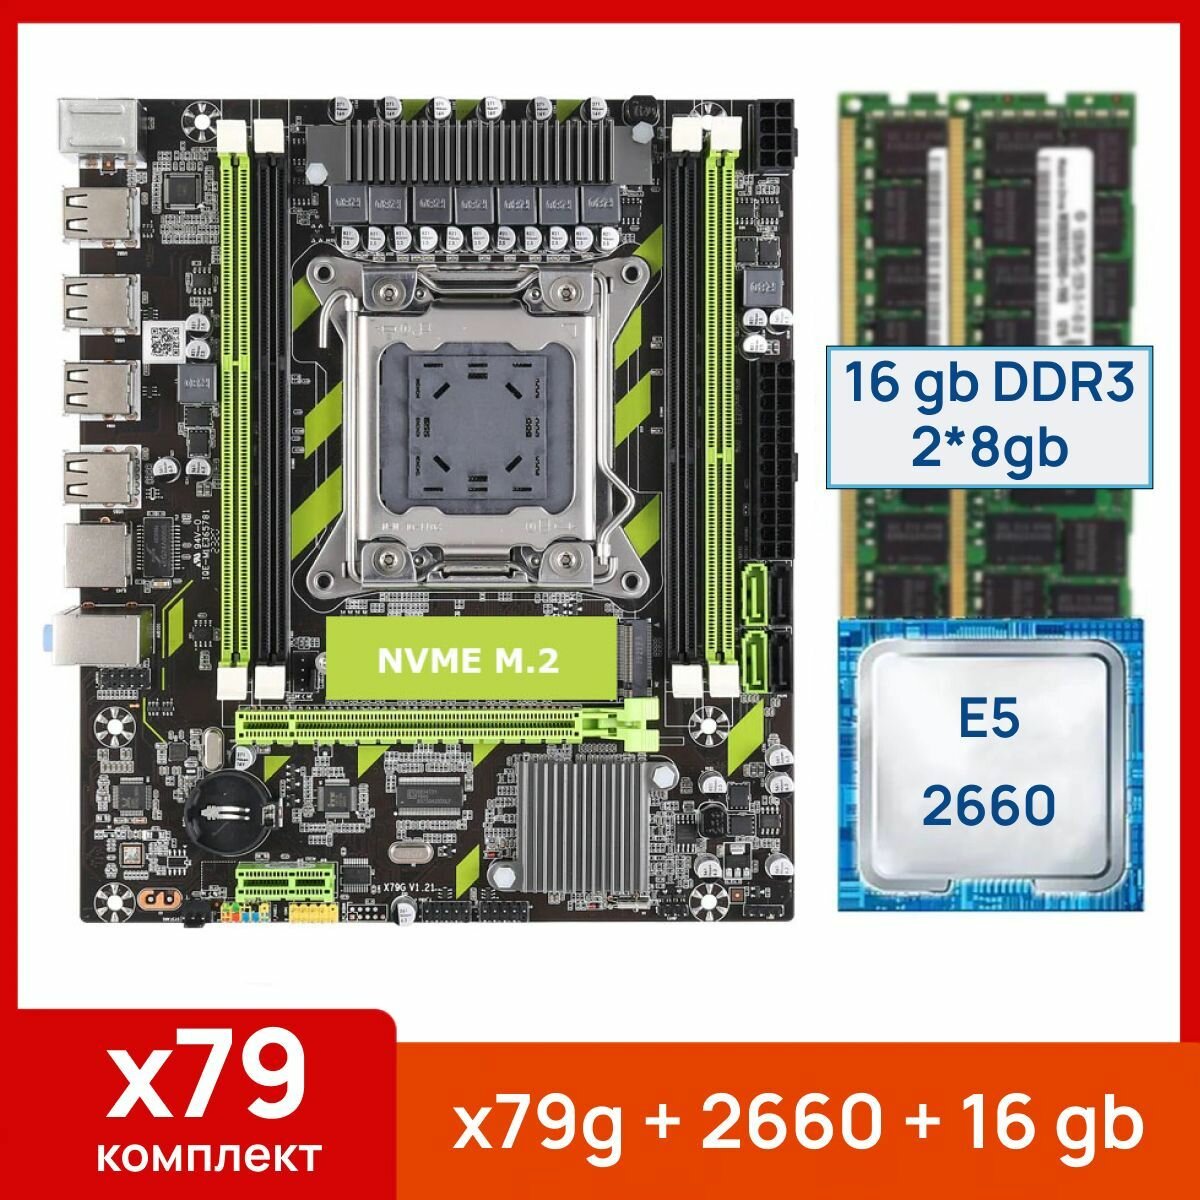 Комплект: Atermiter x79g + Xeon E5 2660 + 16 gb(2x8gb) DDR3 ecc reg